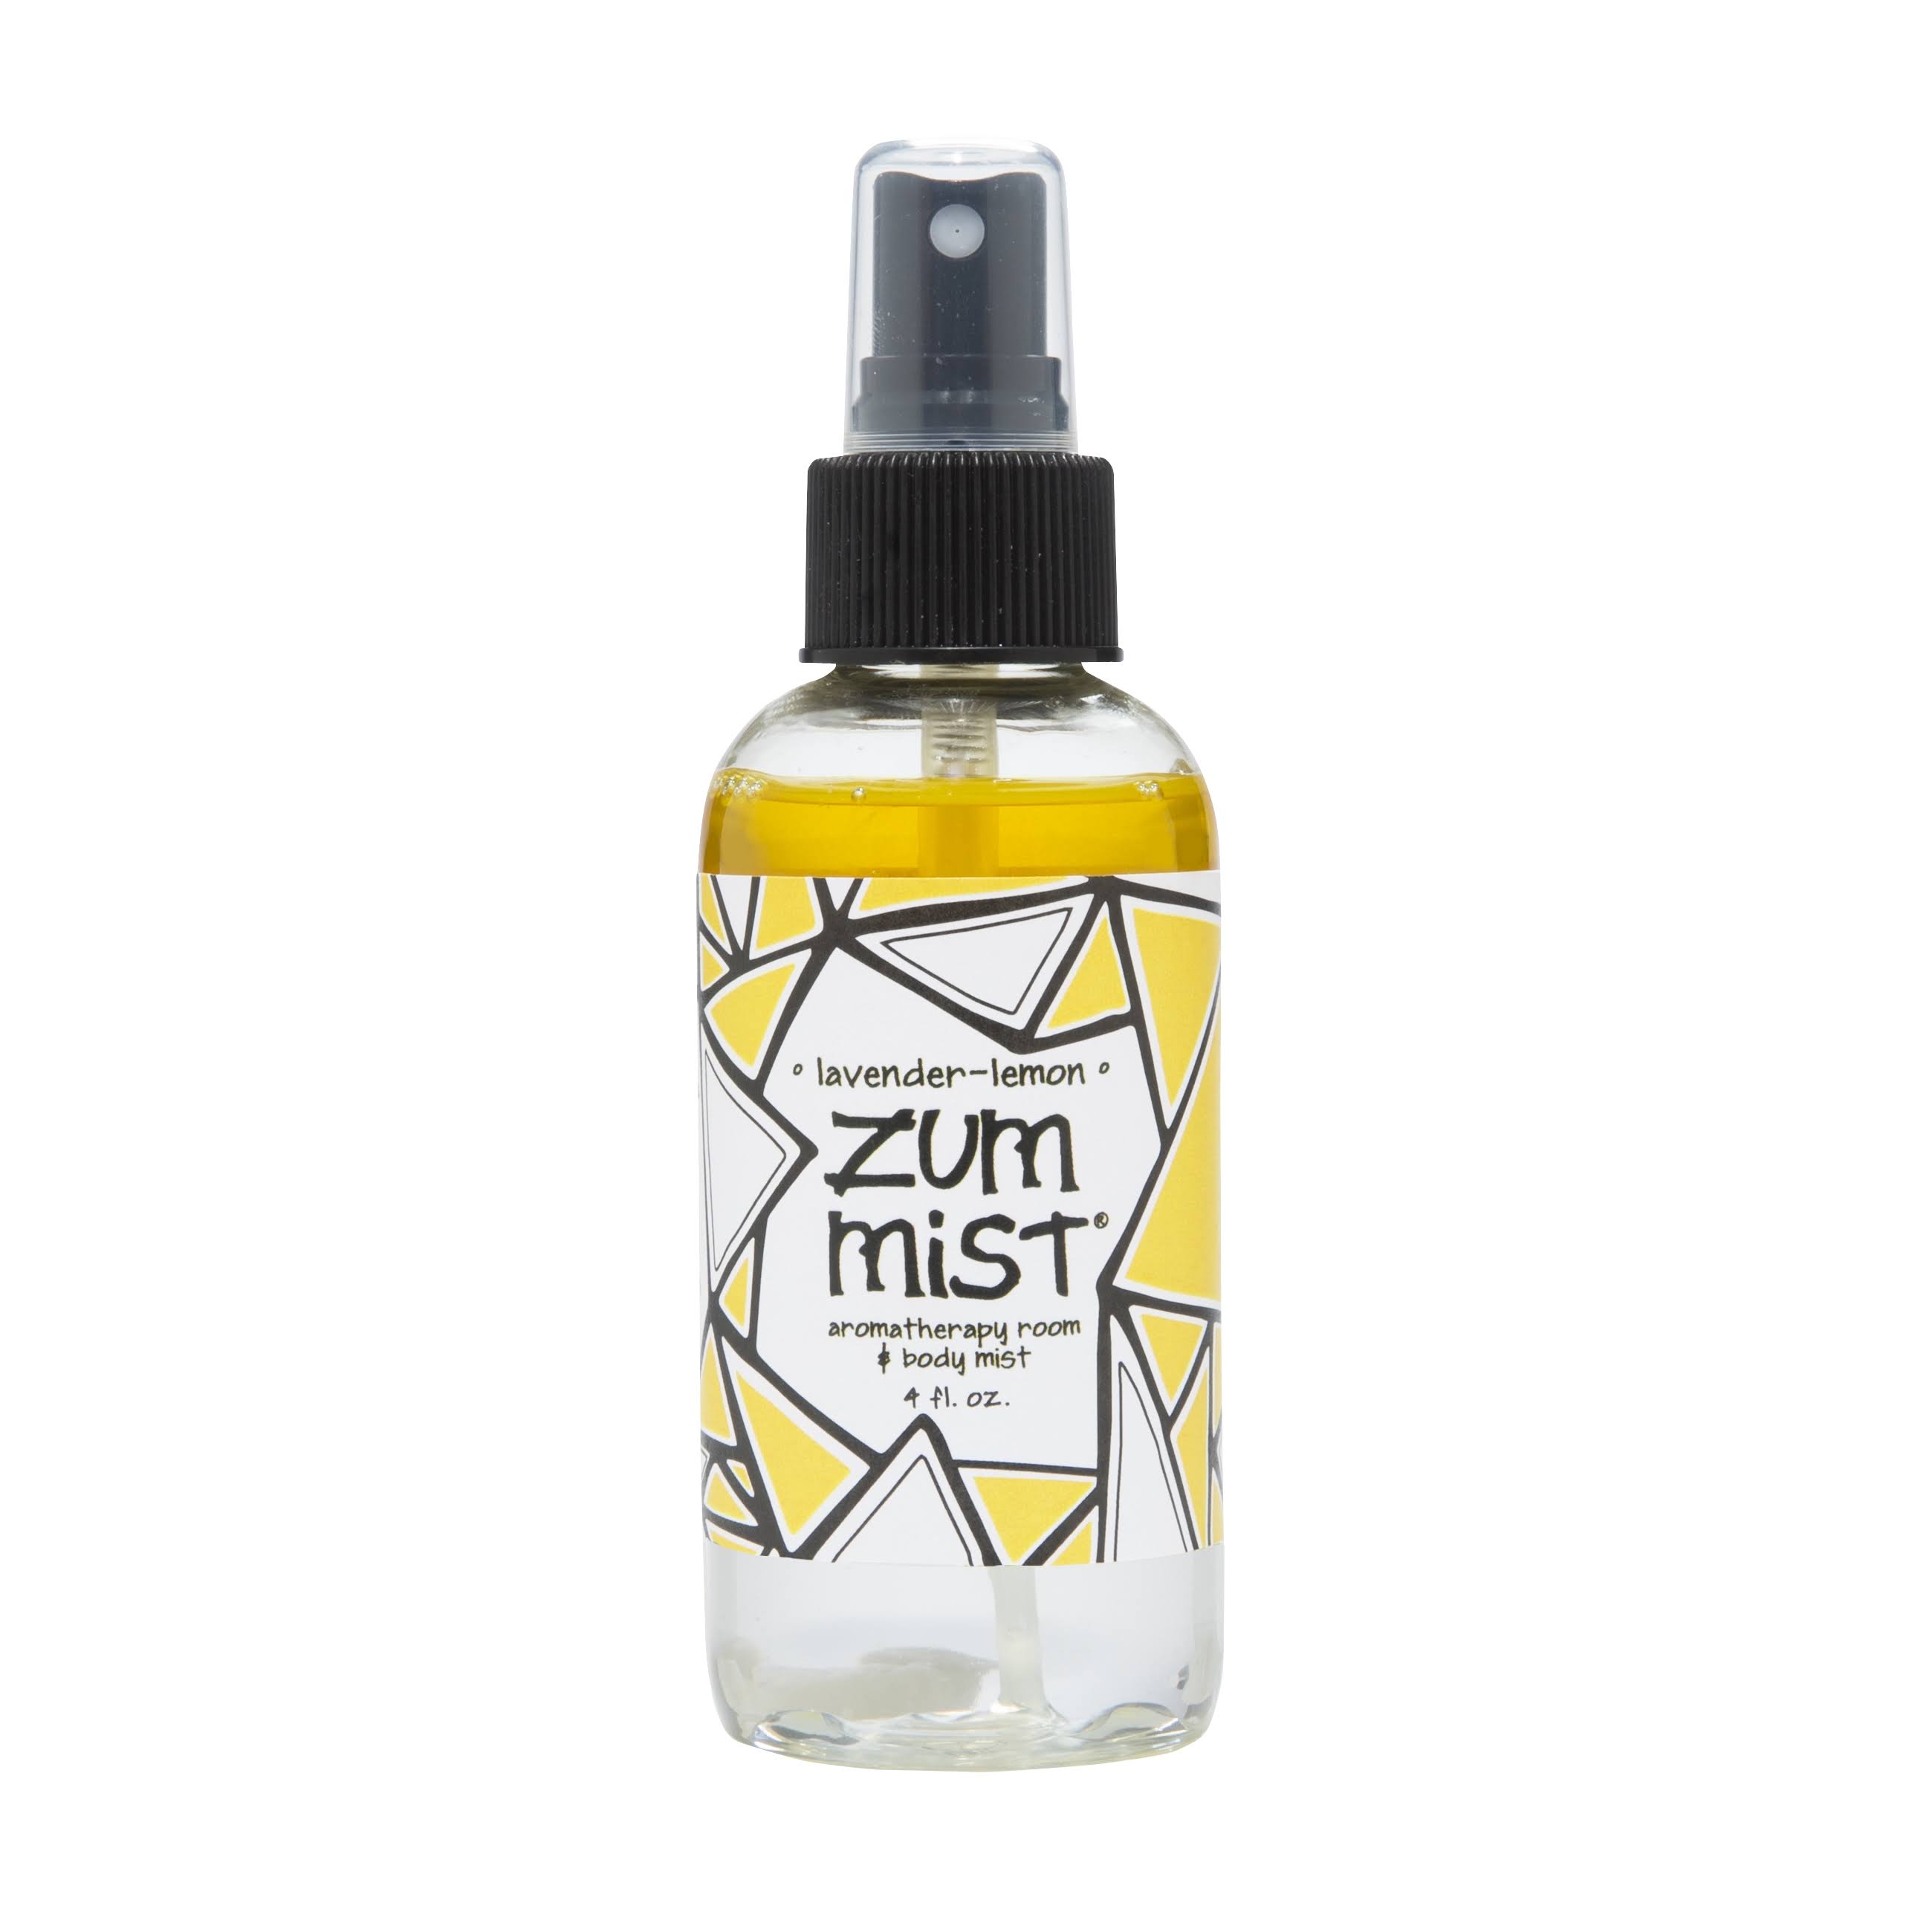 Indigo Wild Zum Mist Aromatherapy Spray - Lavender Lemon, 4oz